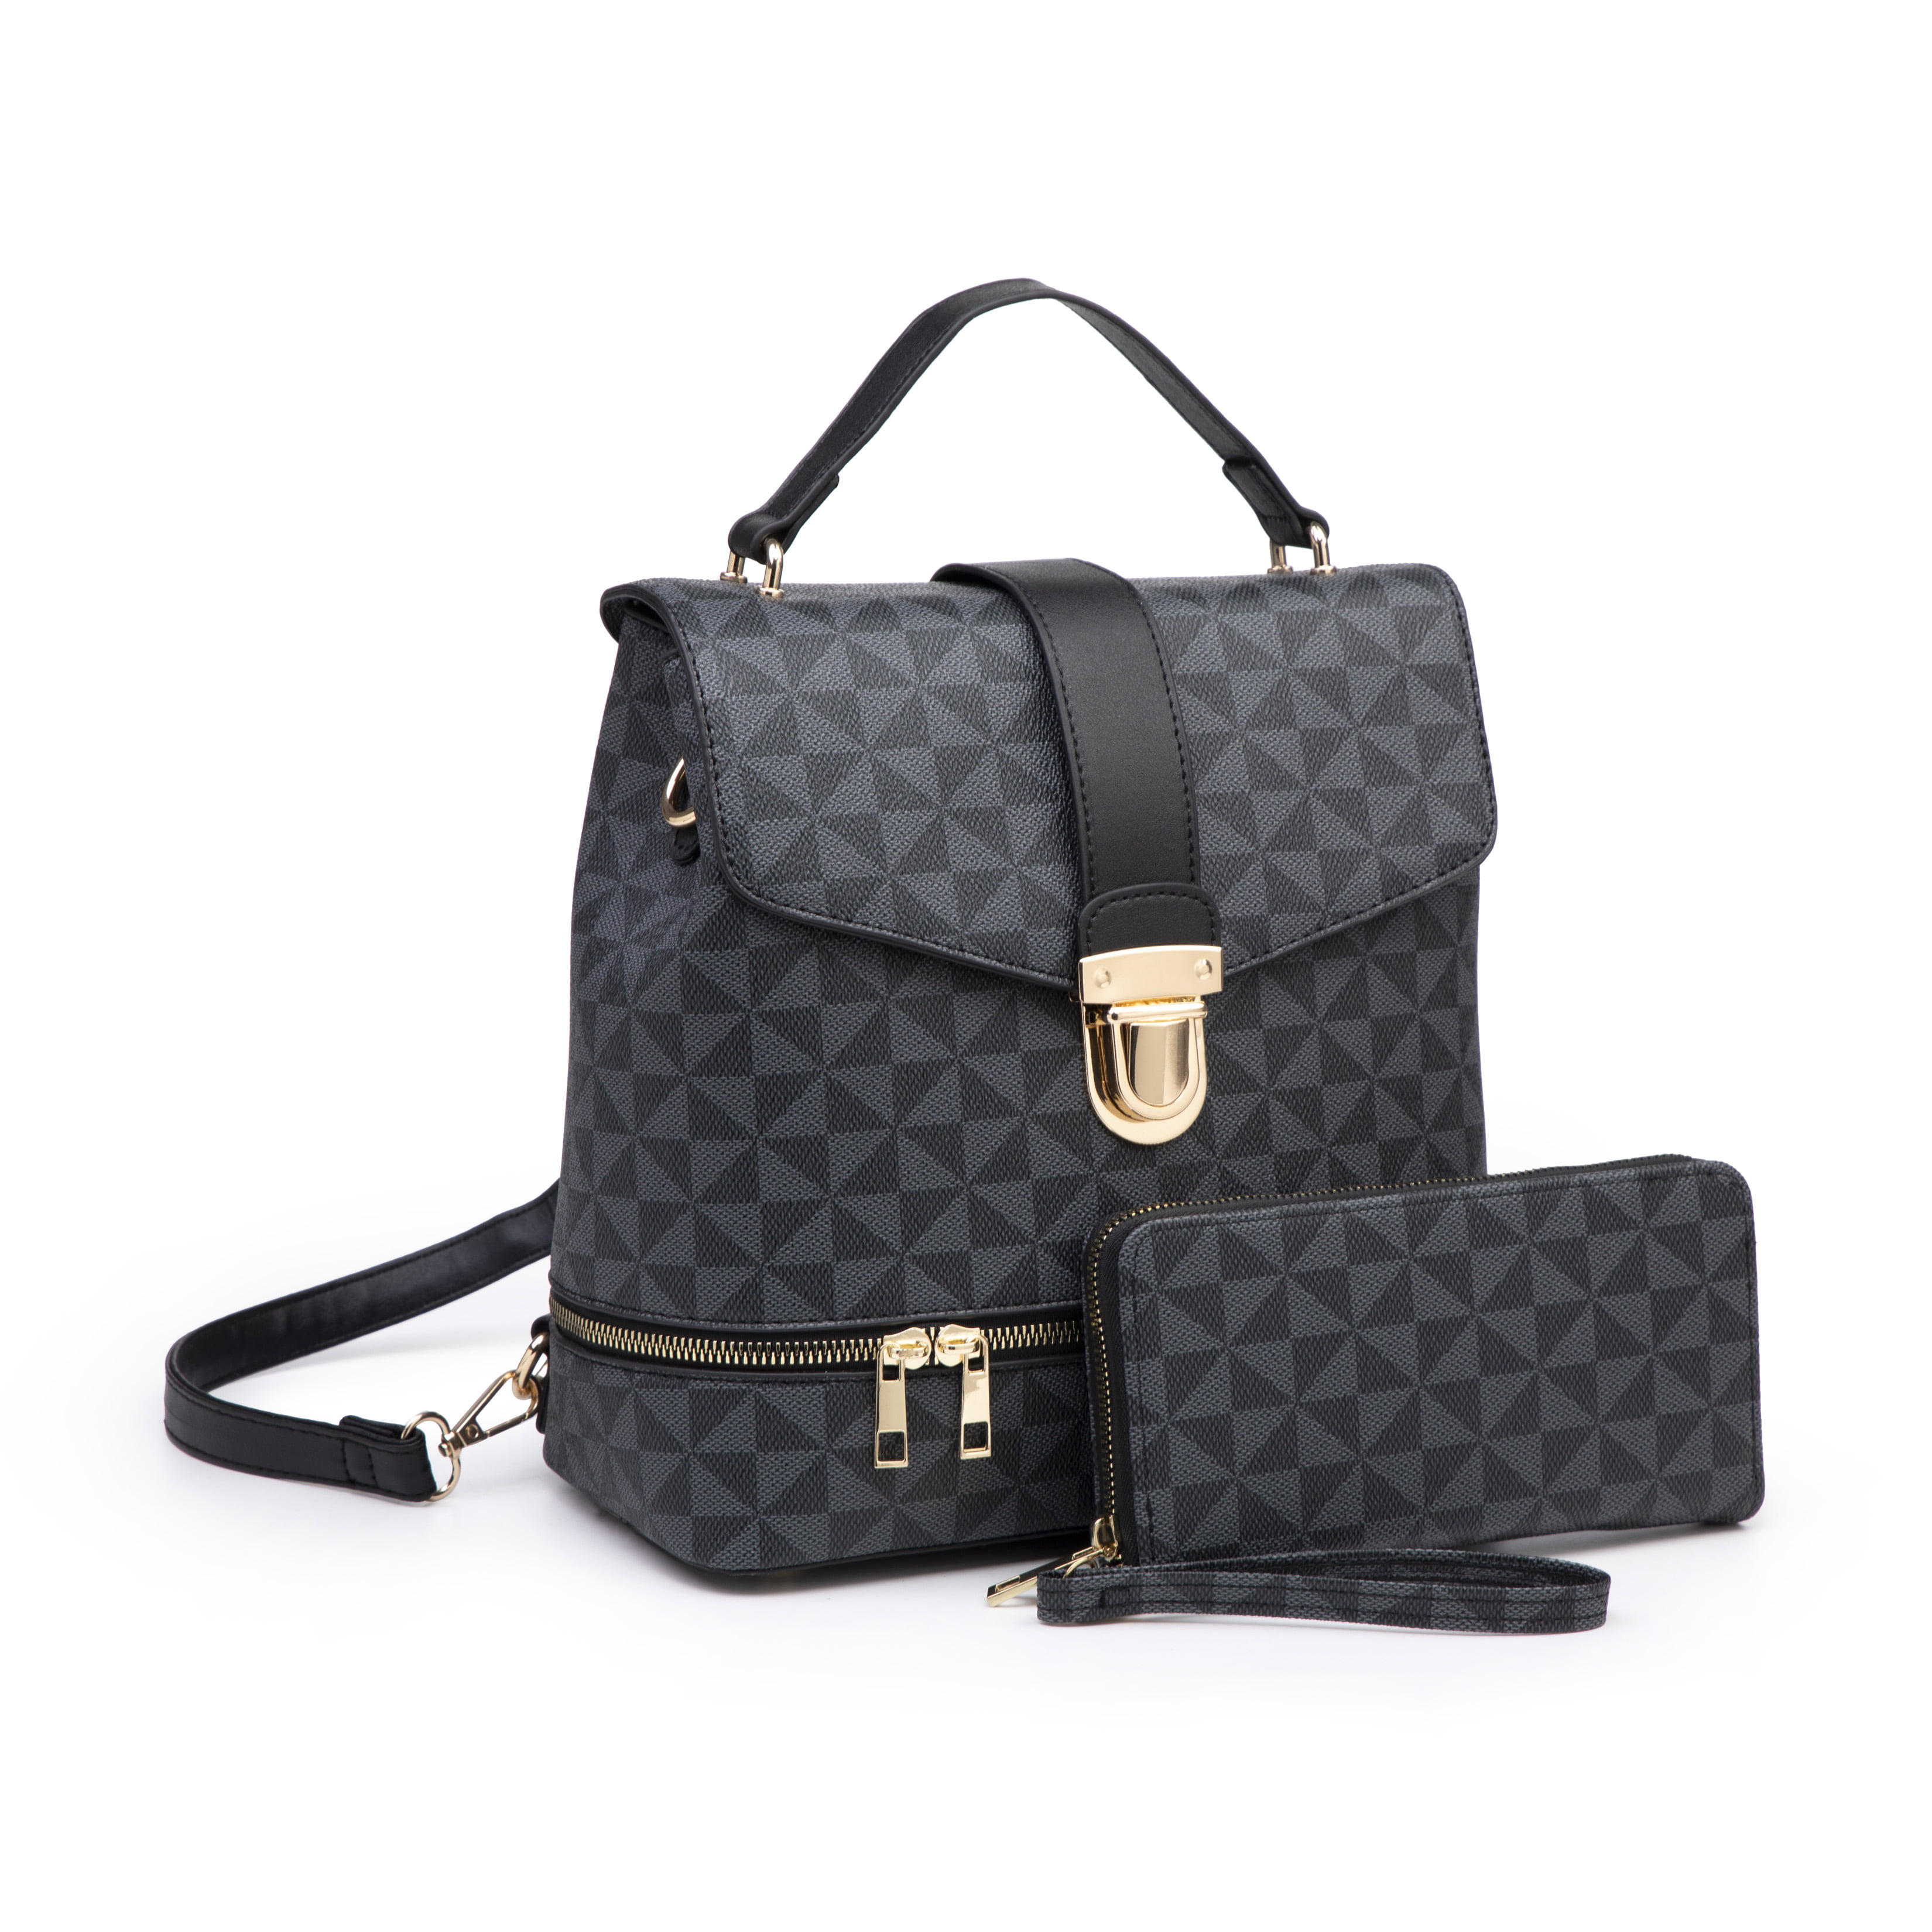 2Pcs/Set Women's PU Leather Shoulder Bag Messenger Satchel Tote Bucket Handbag G 